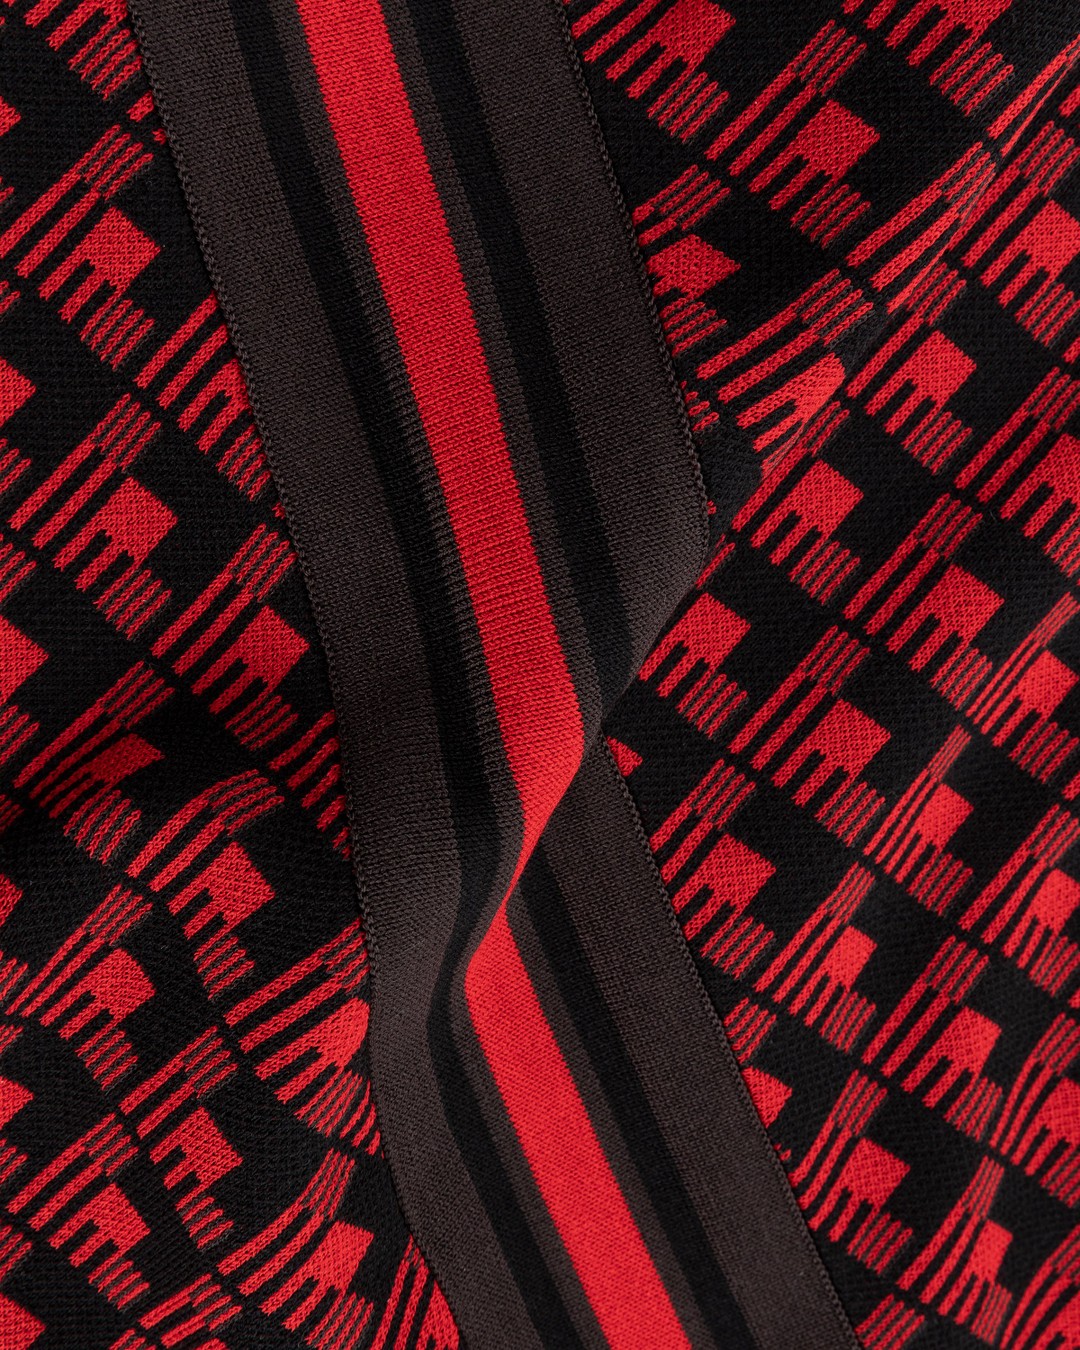 Adidas x Wales Bonner – WB Knit Vest Scarlet/Black - Knitwear - Red - Image 5